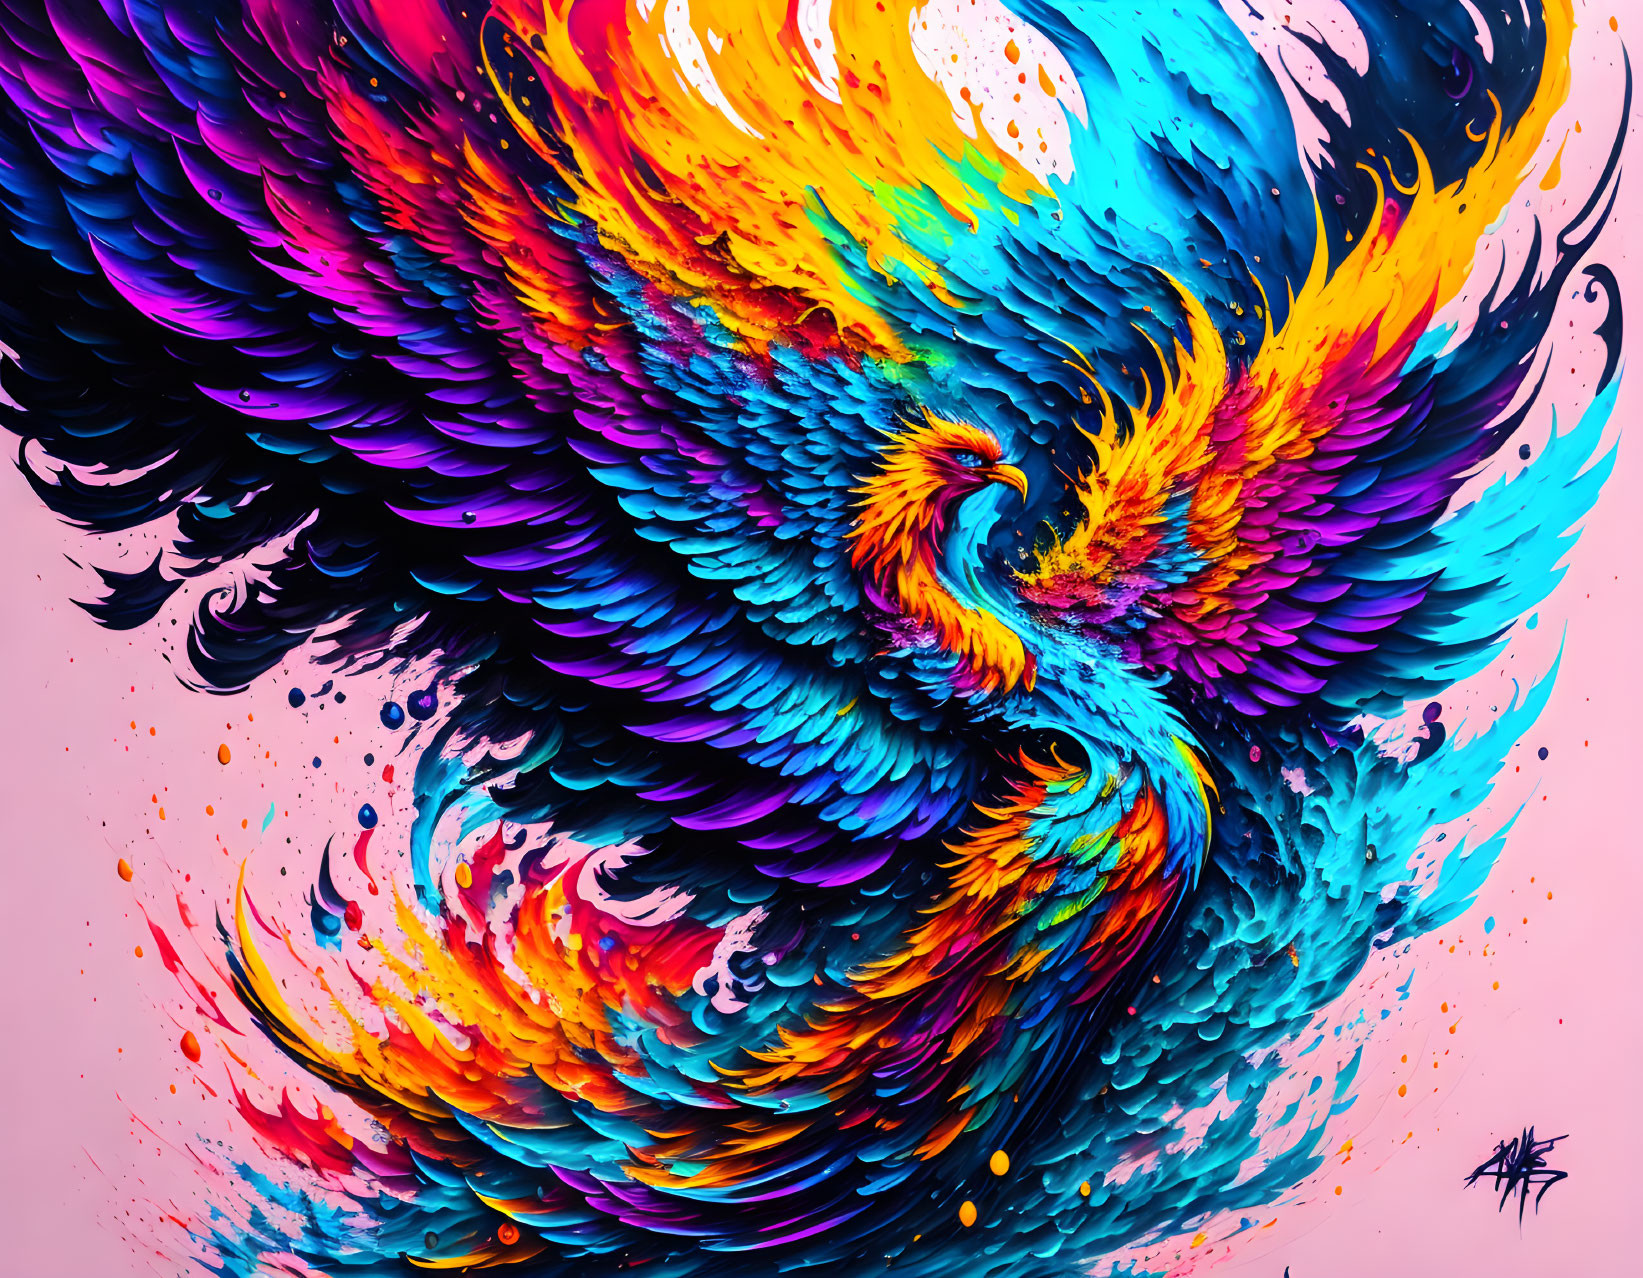 Phoenix Splash